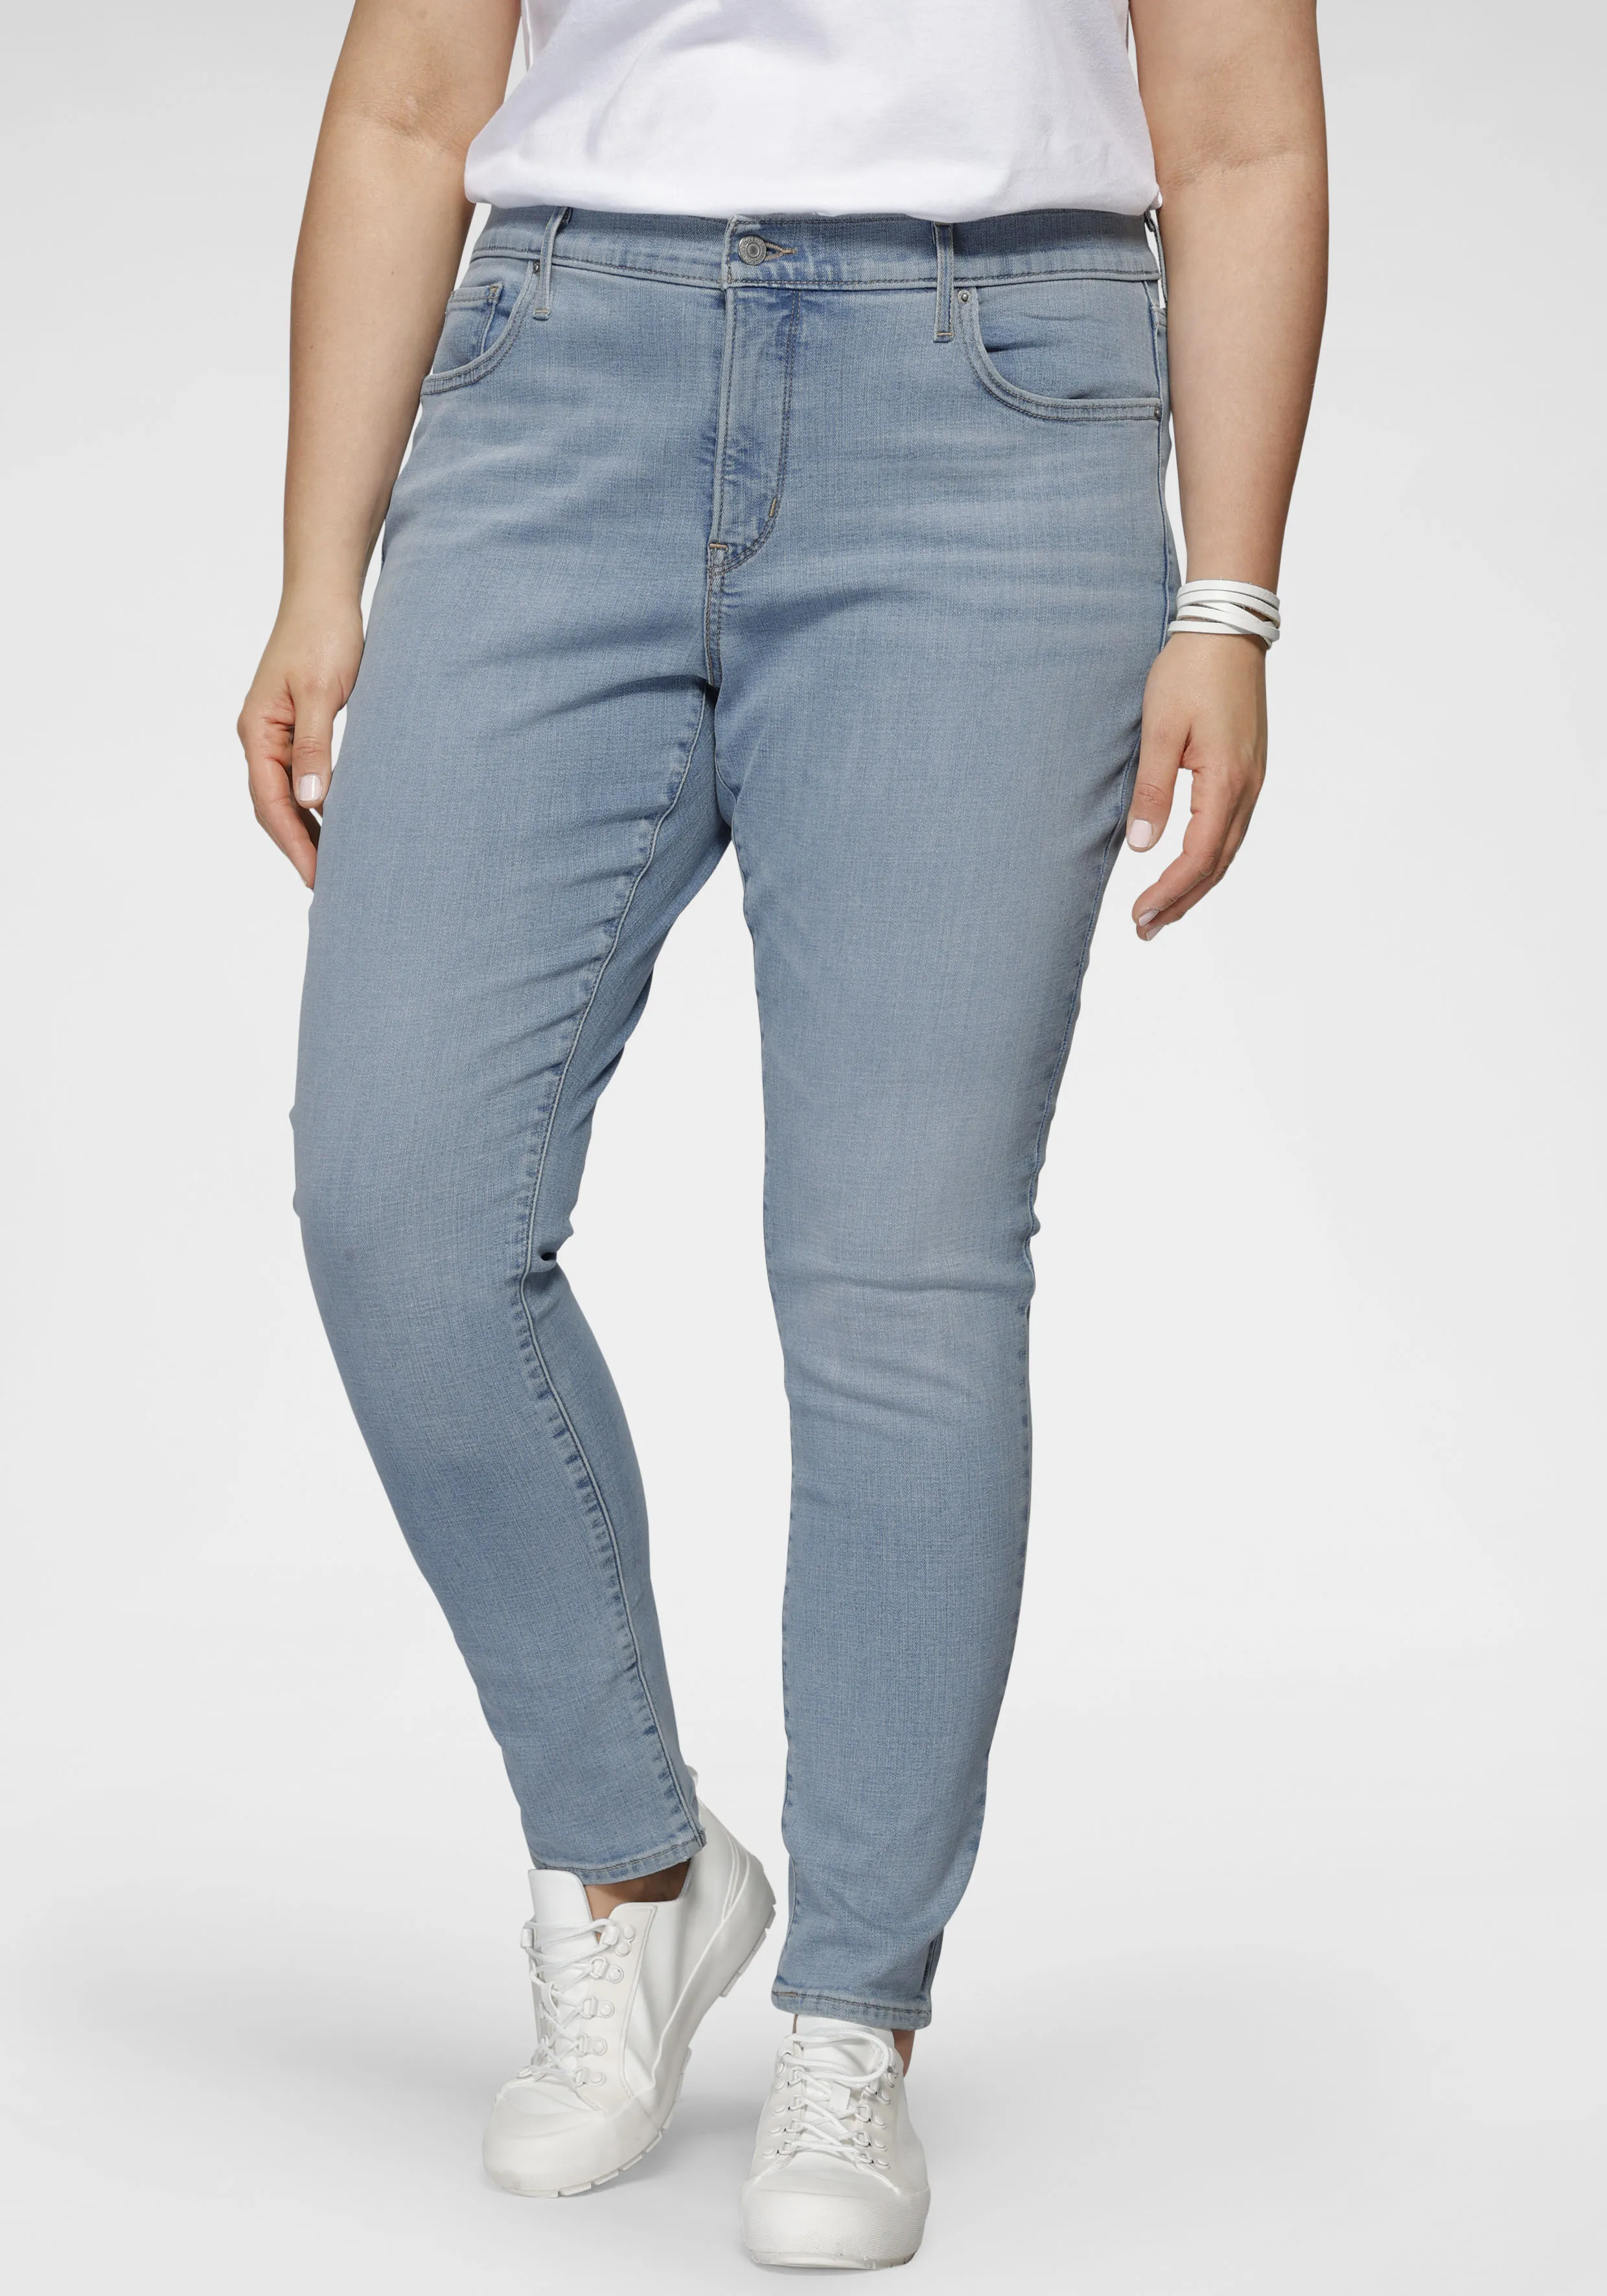 Skinny-fit-Jeans LEVI'S PLUS "311 PL SHAPING SKINNY" Gr. 24 (54), Länge 34, blau (bleached) Damen Jeans Röhrenjeans figurformend mit Stretch